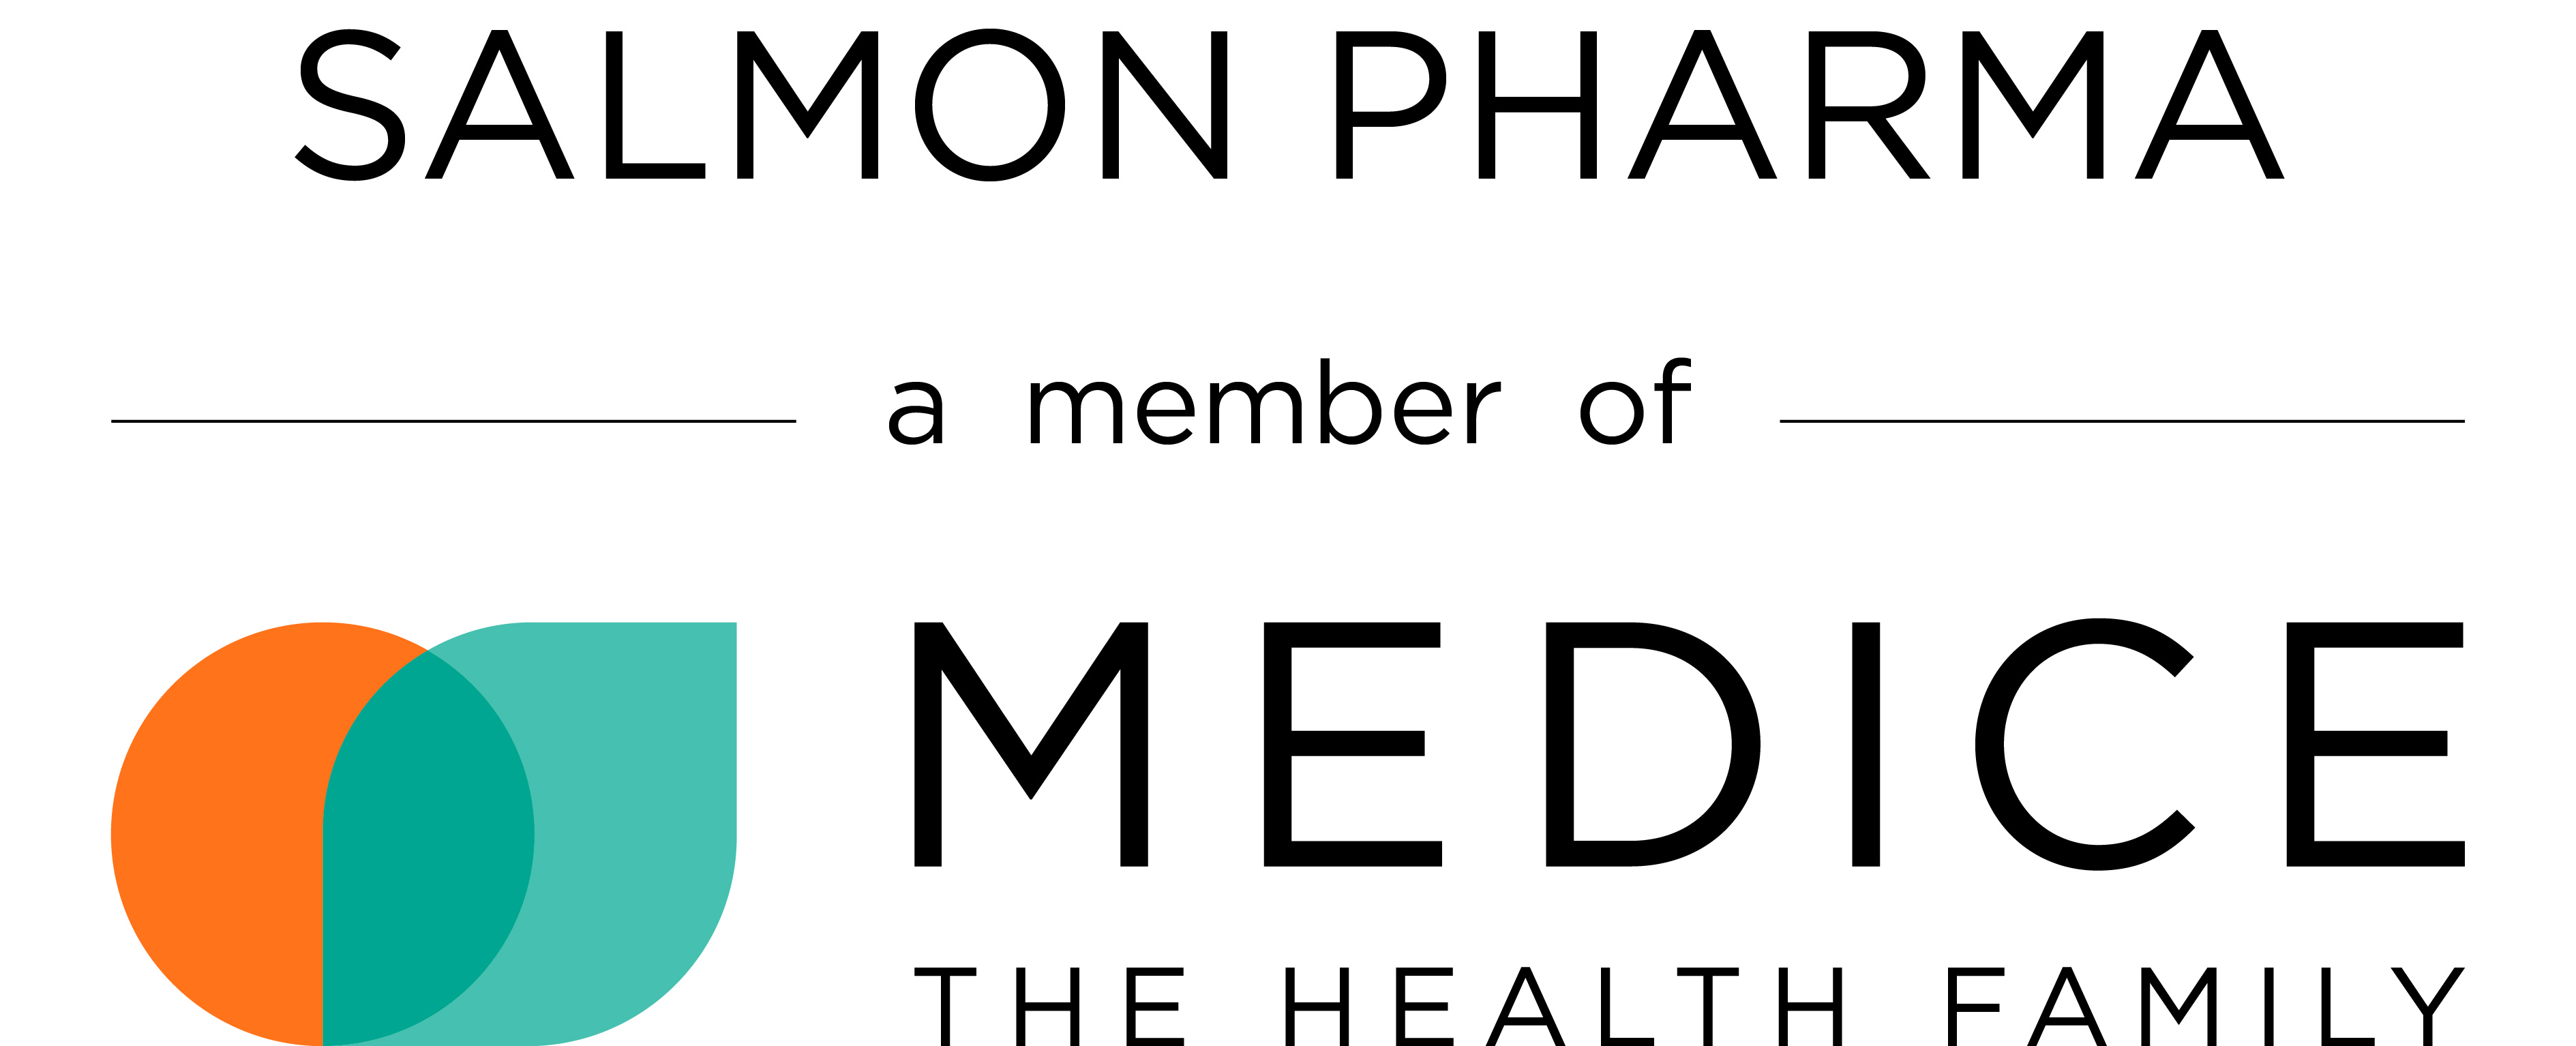 Salmon Pharma - Medica HF